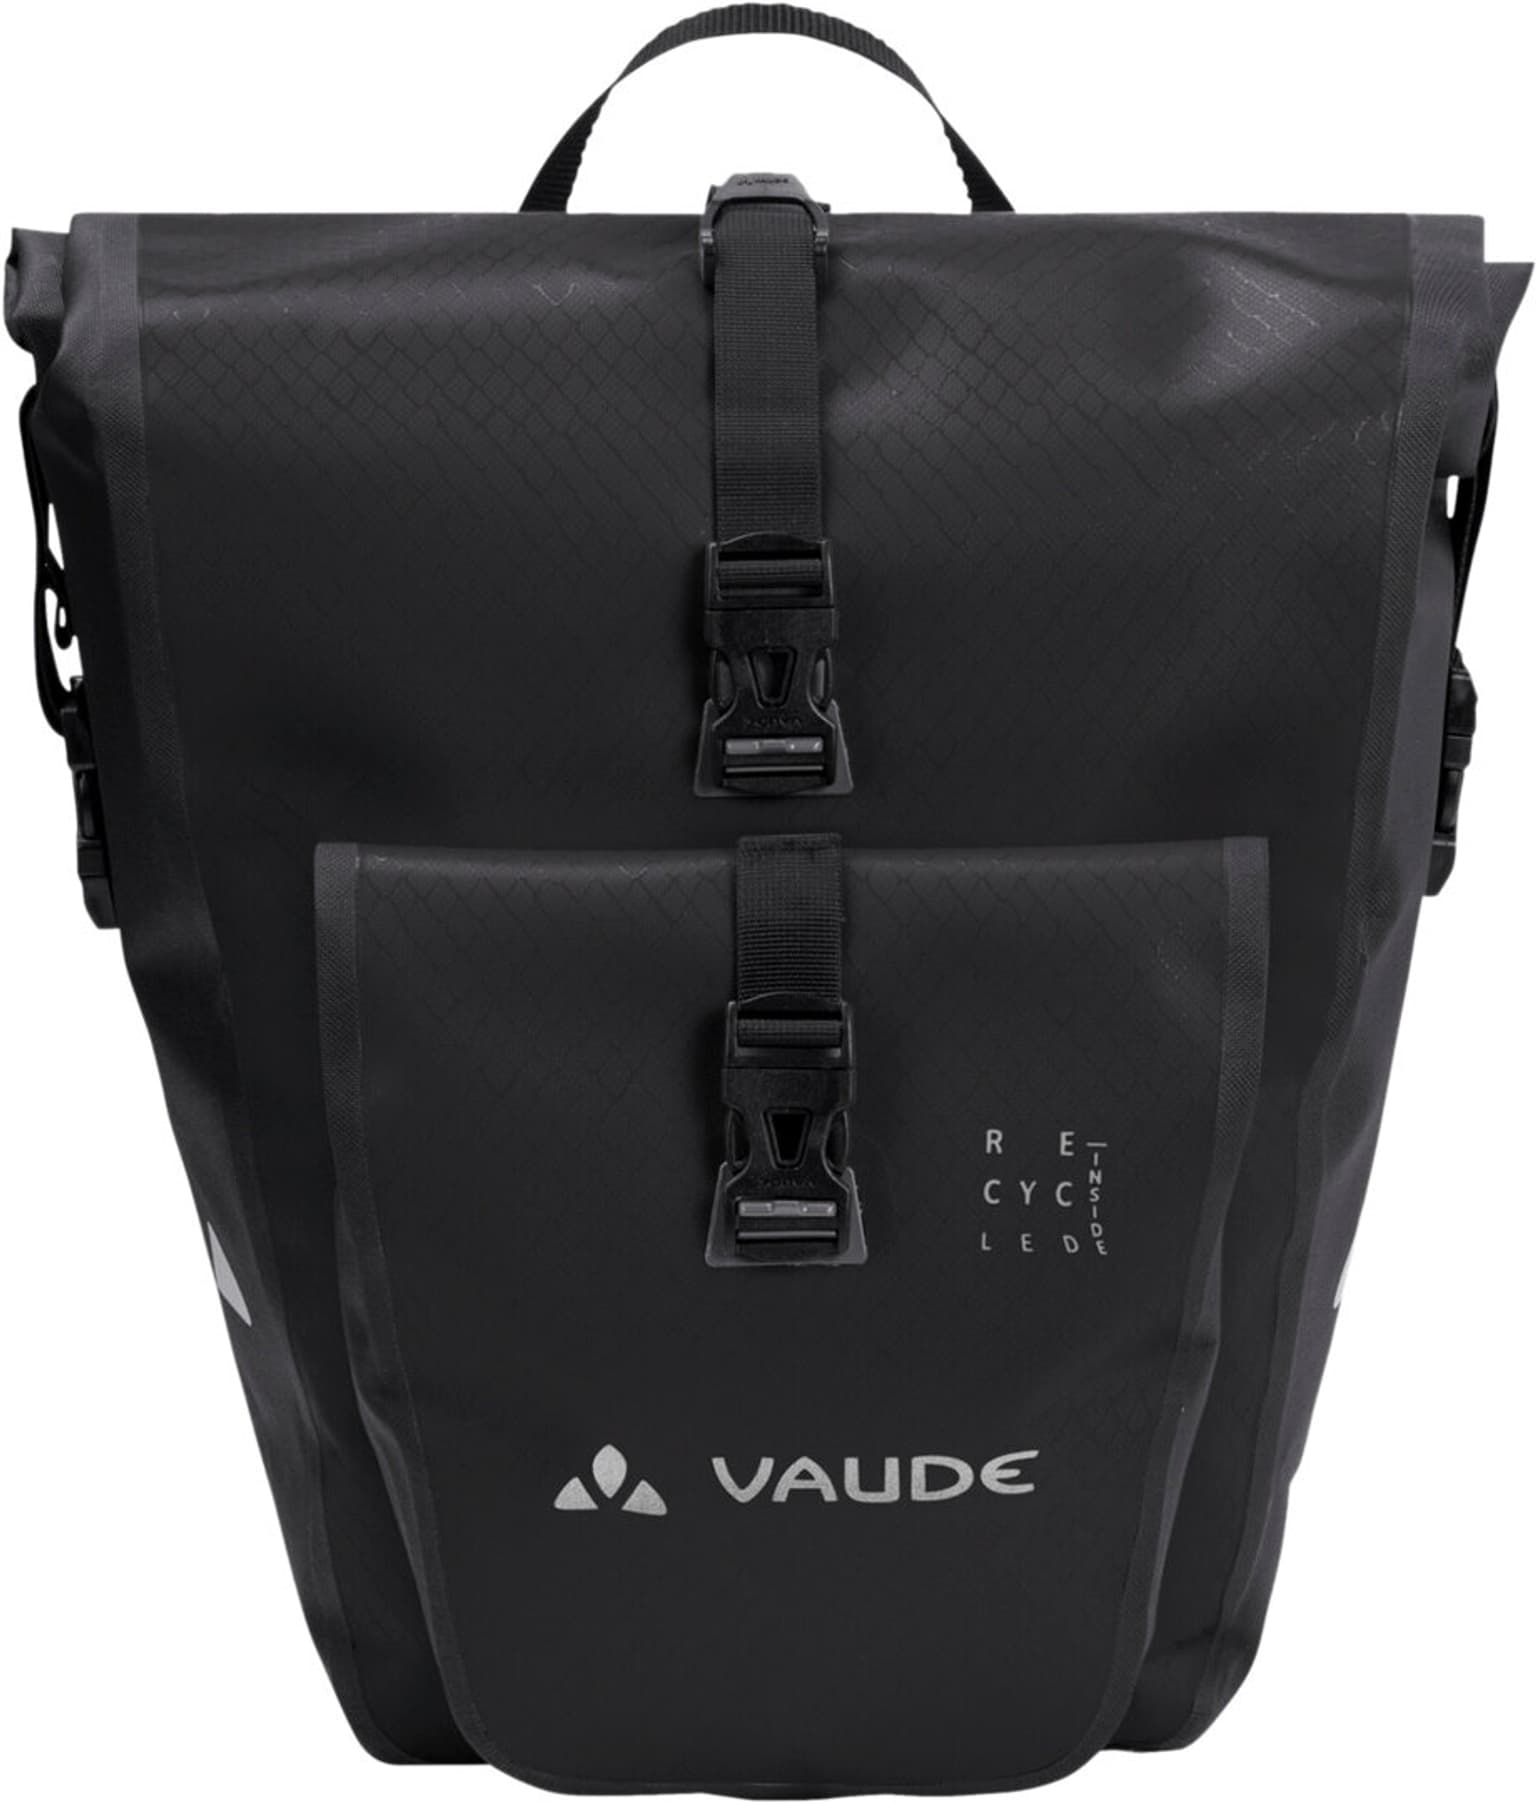 Vaude Vaude Aqua Back Plus Single Rucksack schwarz 1